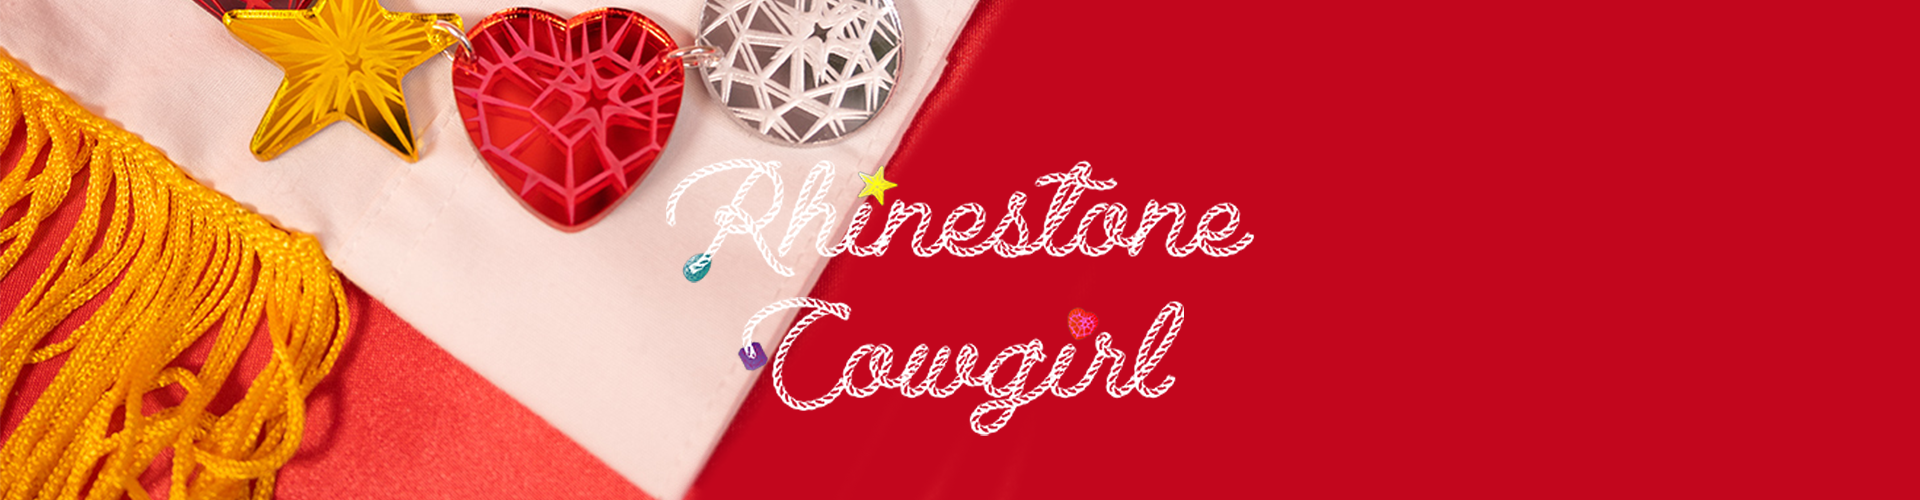 NEW IN: Rhinestone Cowgirl